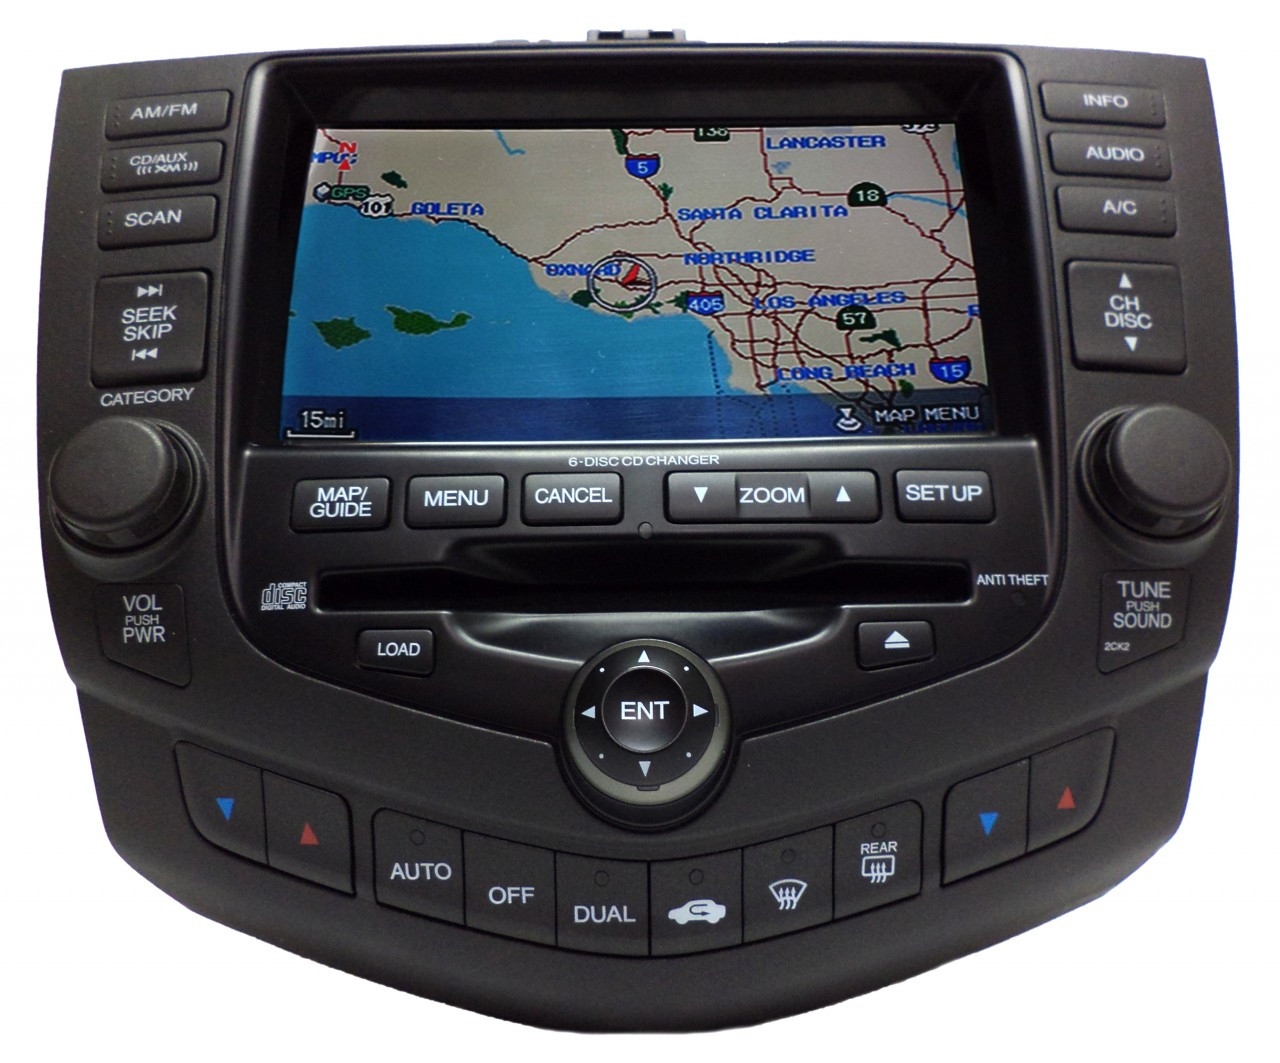 2005 Honda accord dash navigation system #6